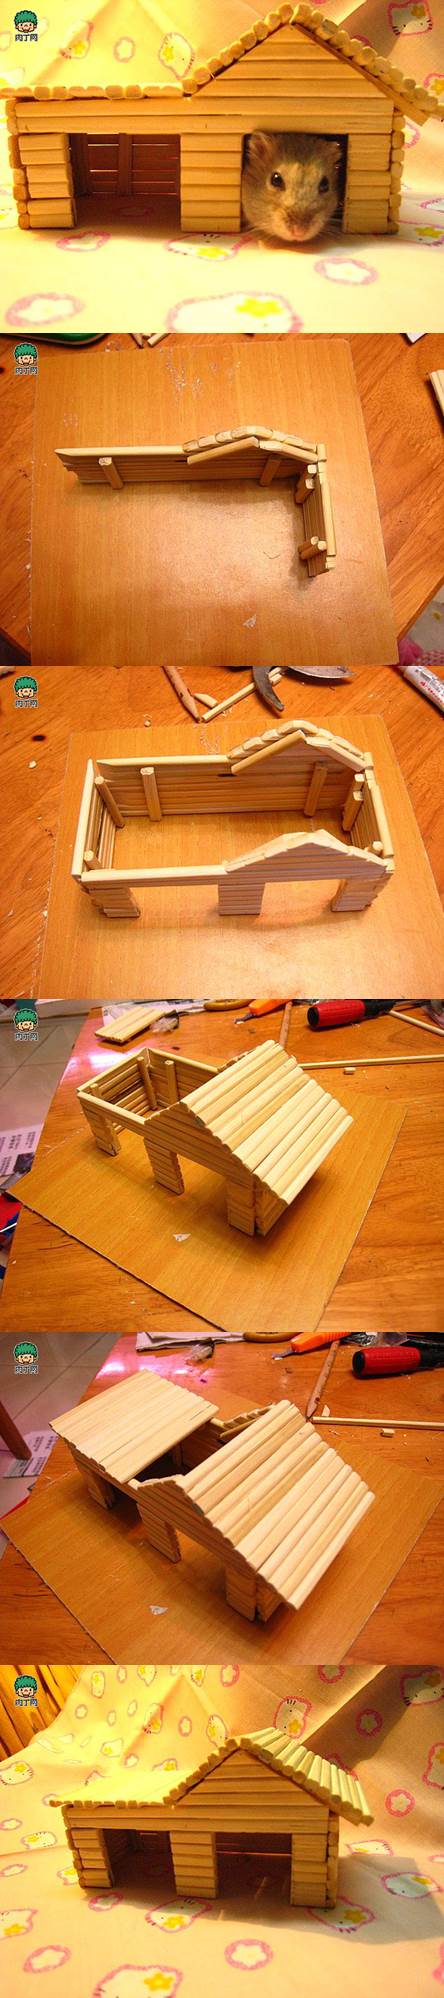 DIY Hamster House with Chopsticks 2